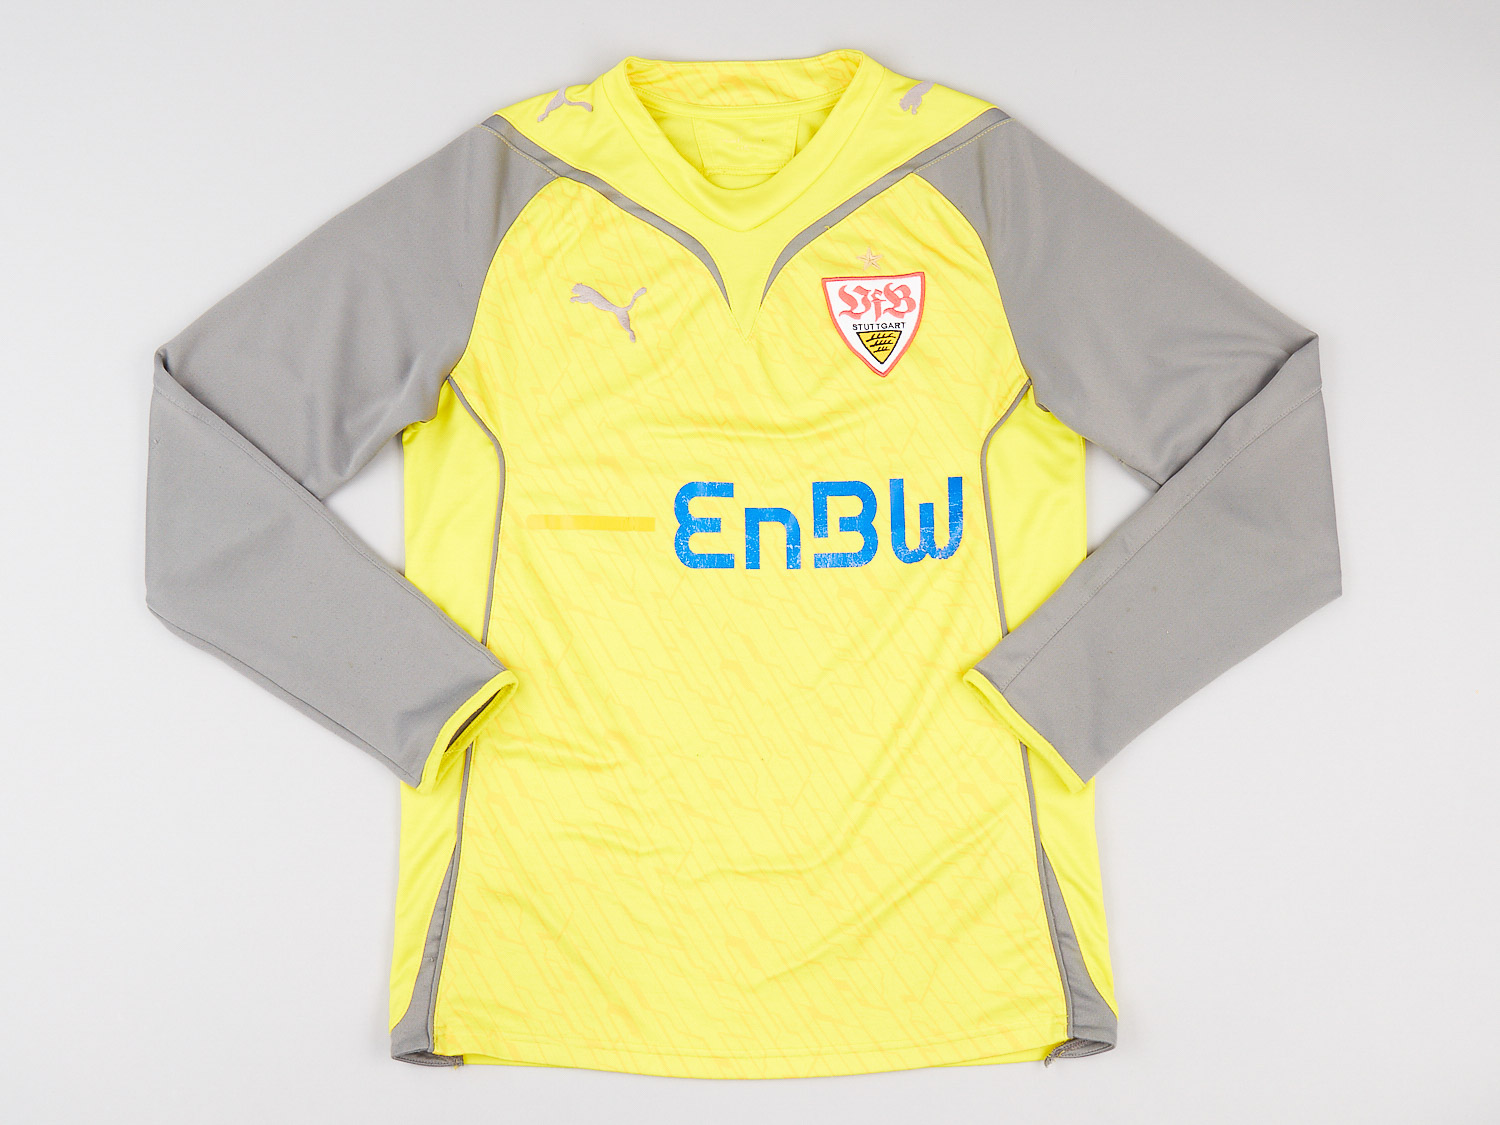 VfB Stuttgart  Goleiro camisa (Original)